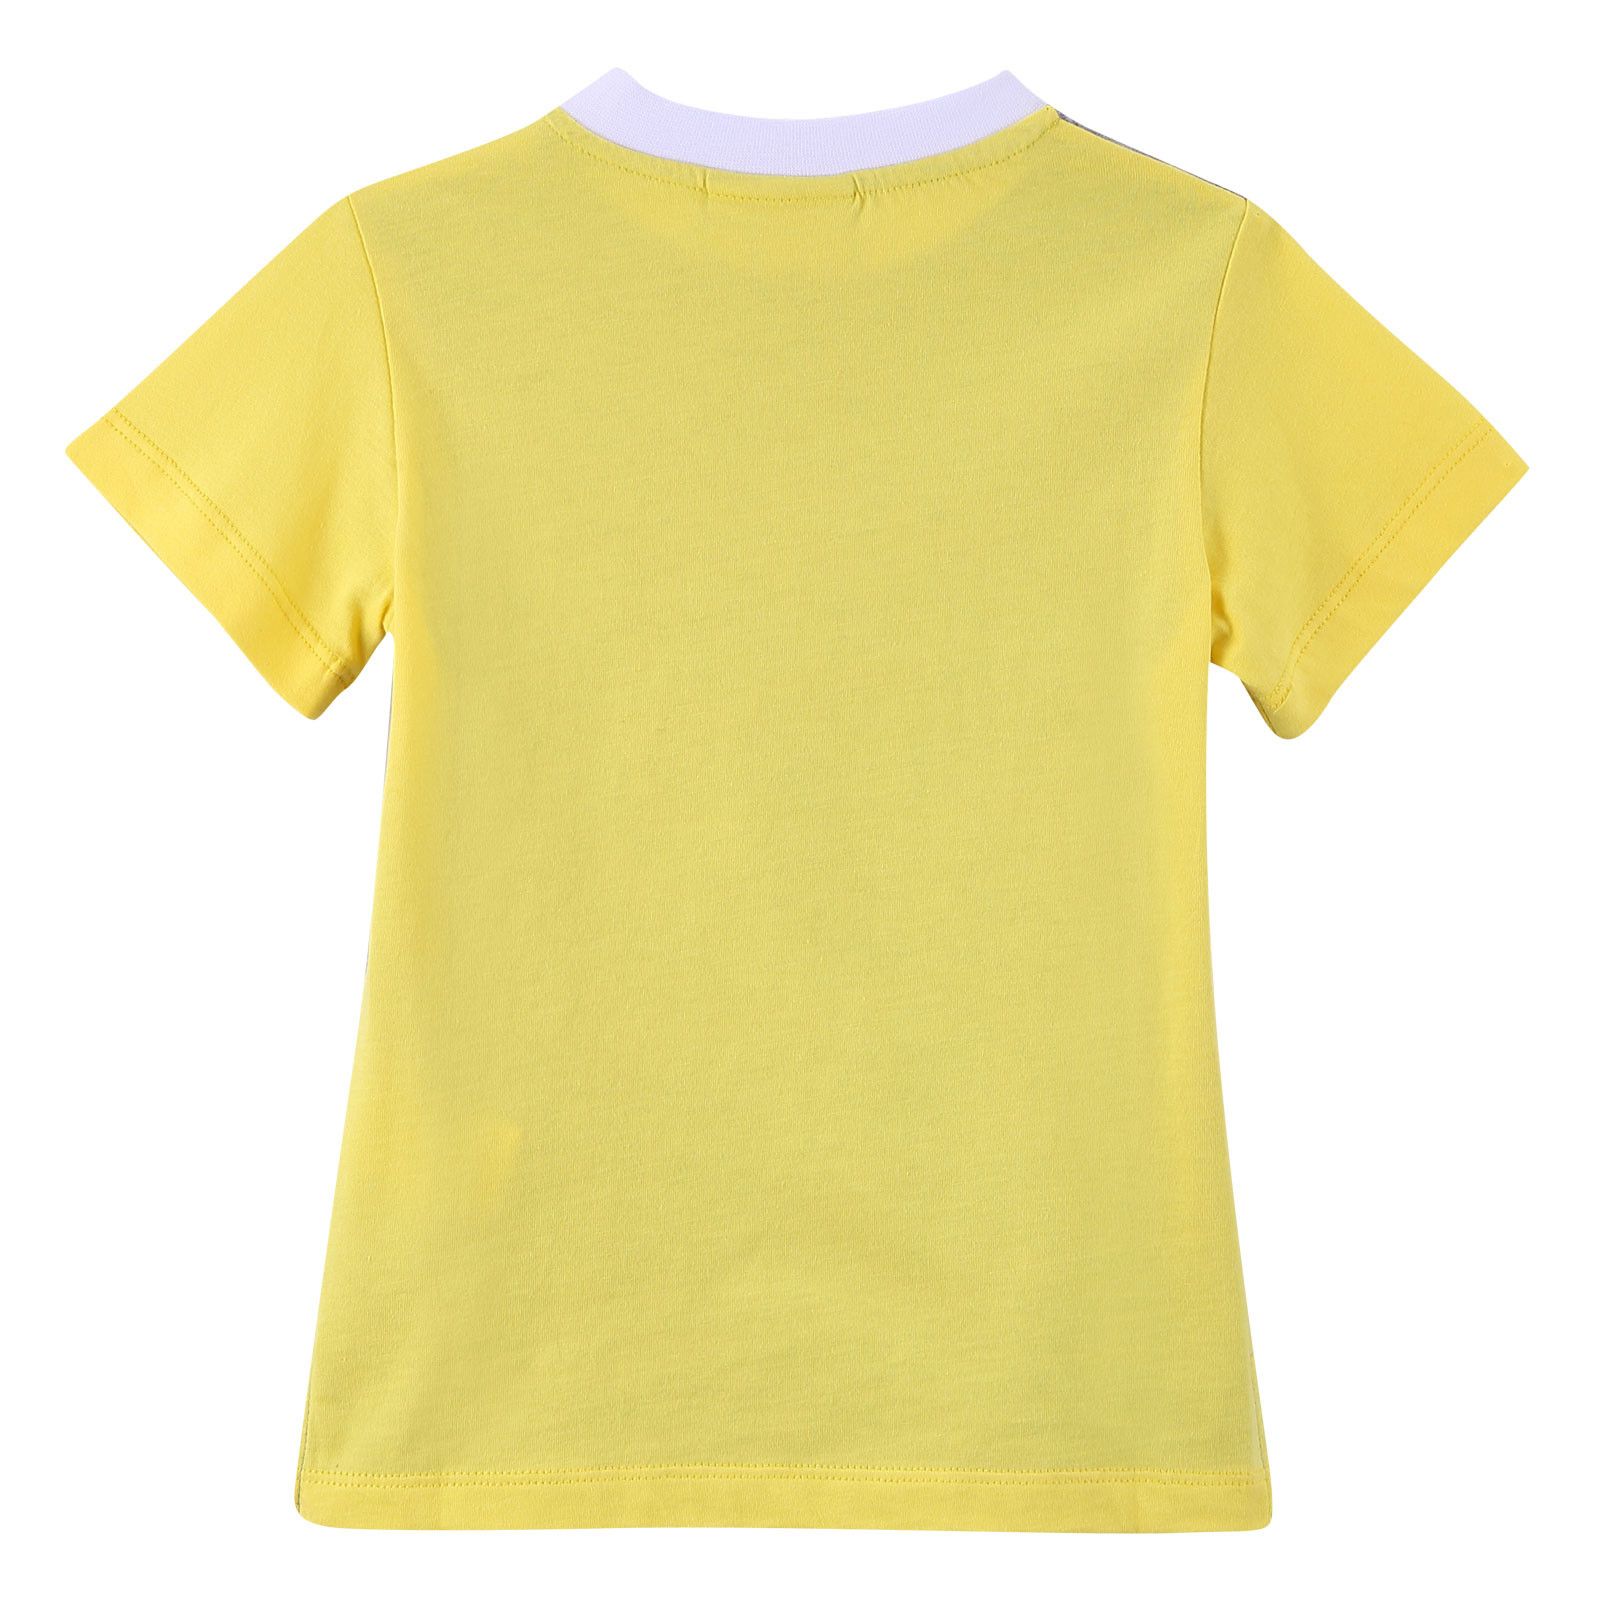 Boys Grey&Yellow 'FF Monster' Printed Cotton T-Shirt - CÉMAROSE | Children's Fashion Store - 2